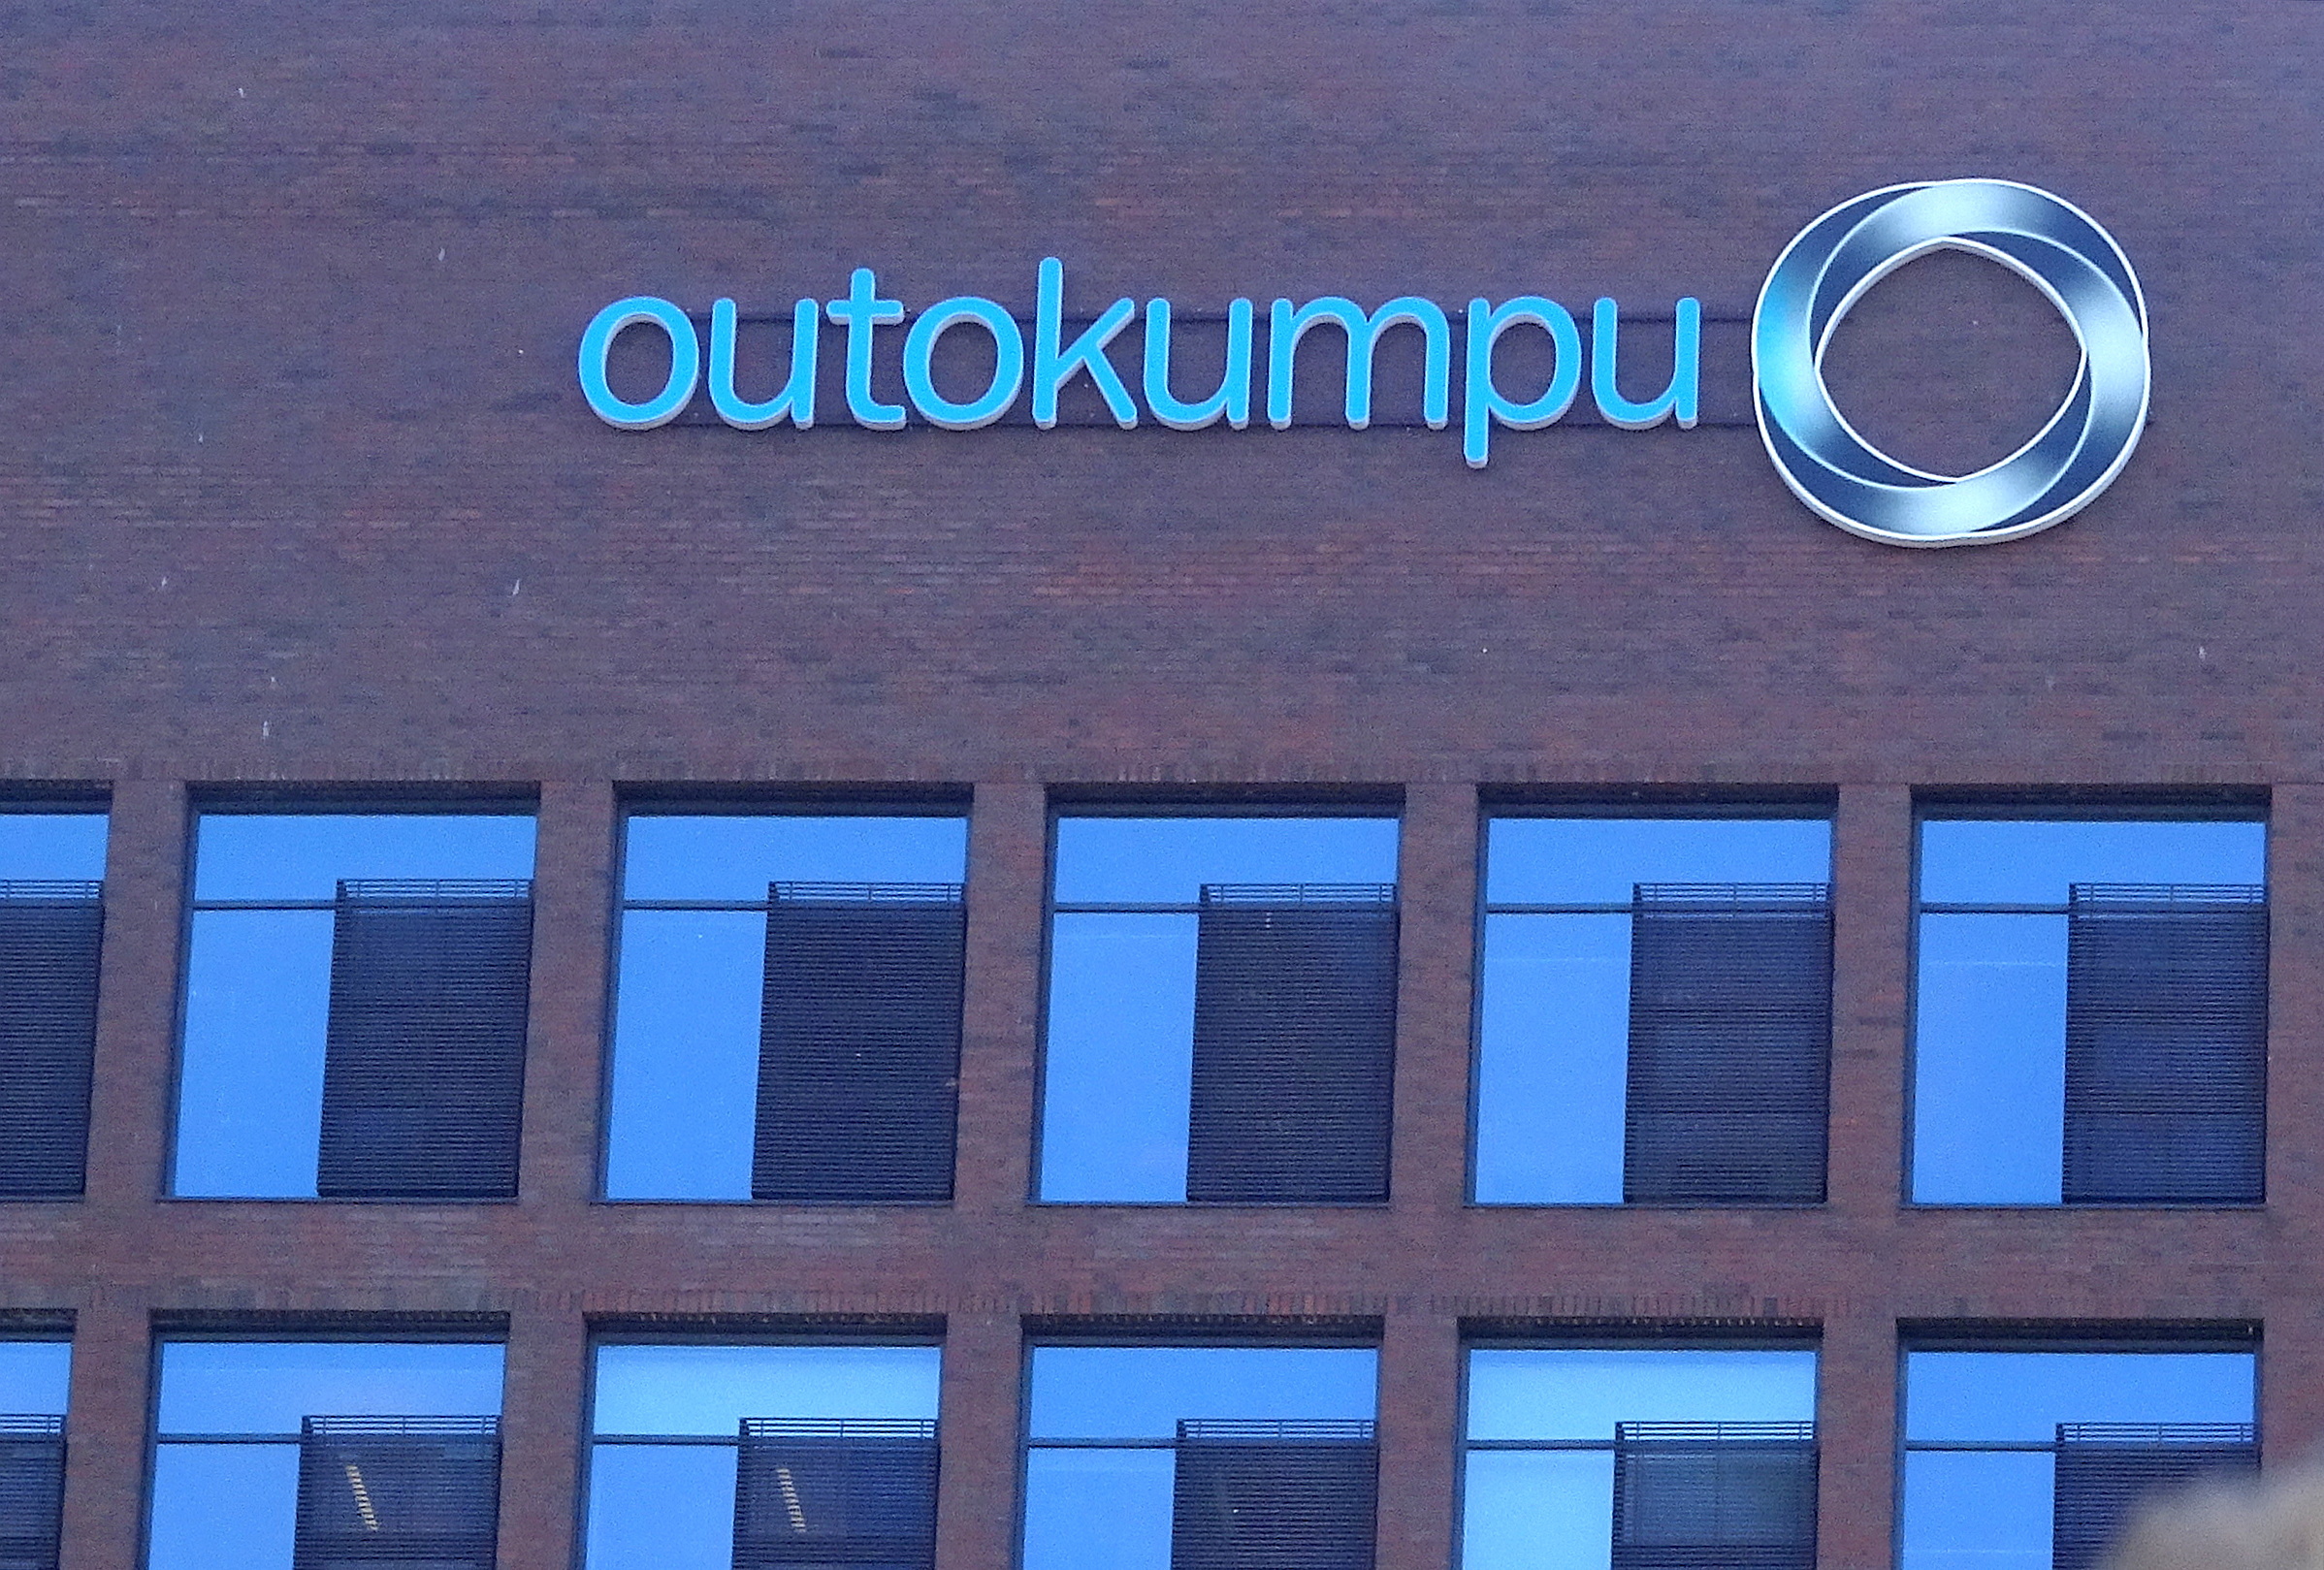 Outokumpu logo is seen at the company's head office in Helsinki